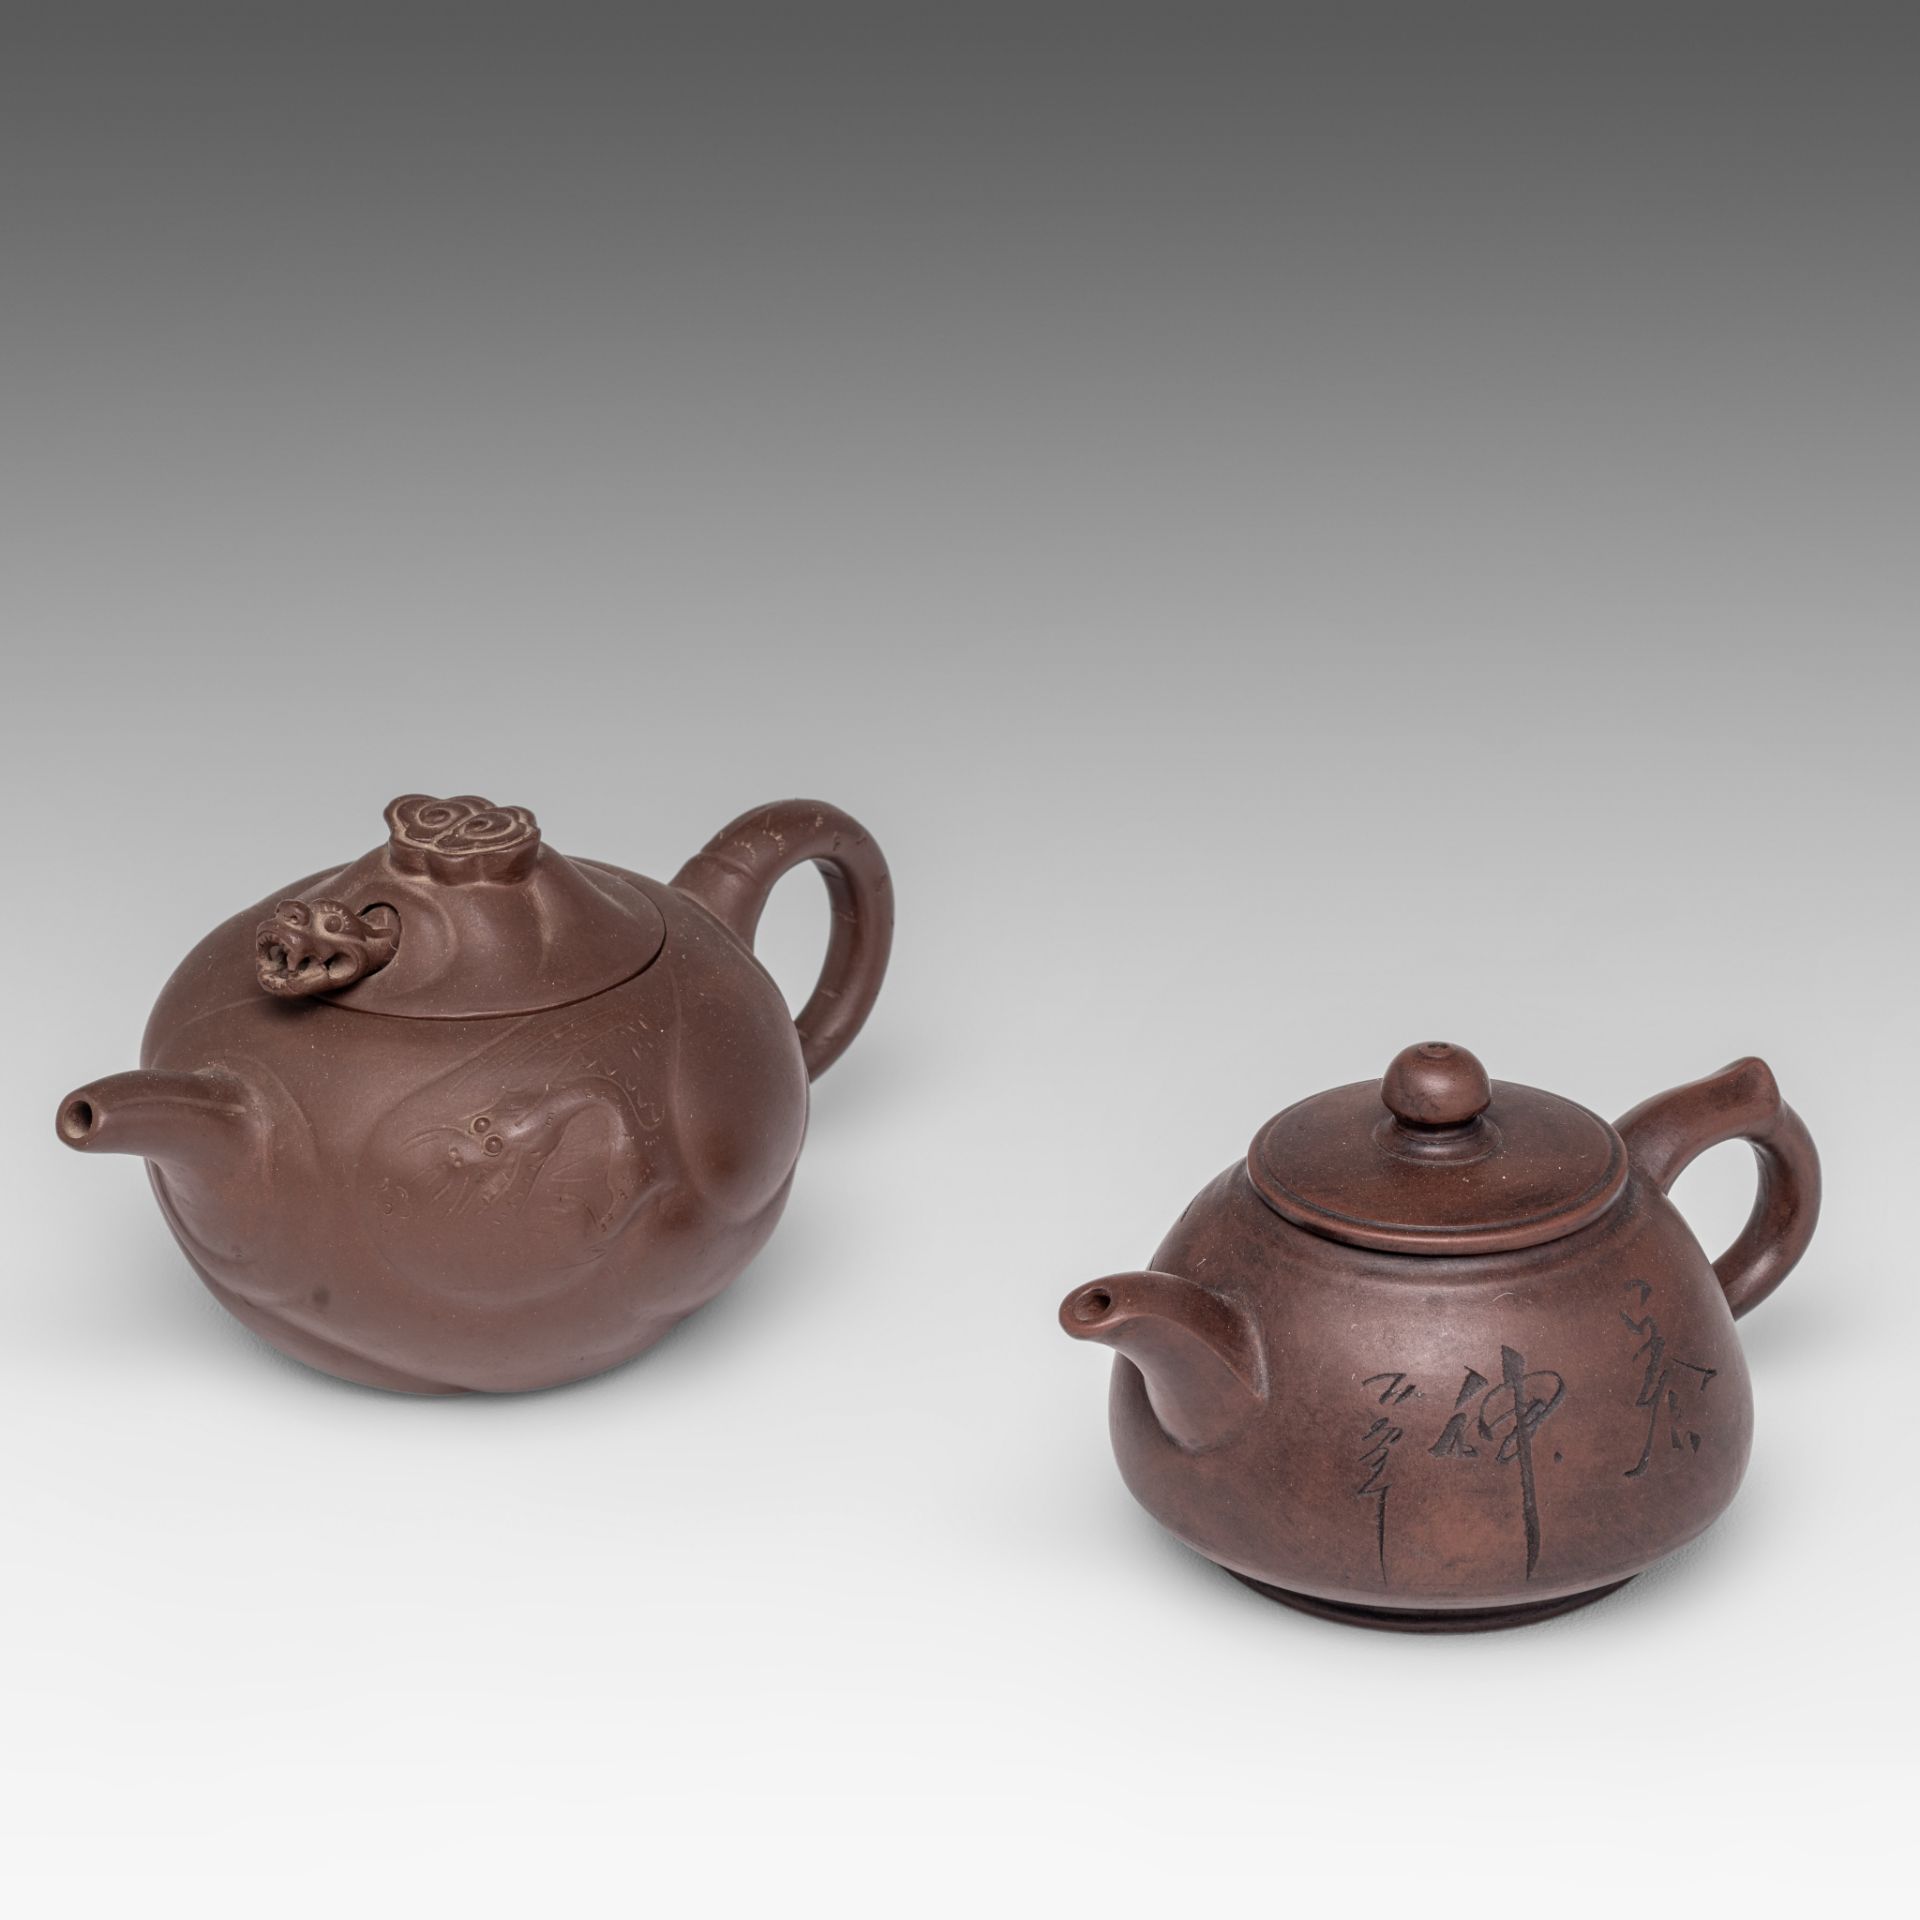 Two Chinese zhisha teapots, 20thC, L 17 - H 10,5 cm / L 20,5 - H 11,5 cm